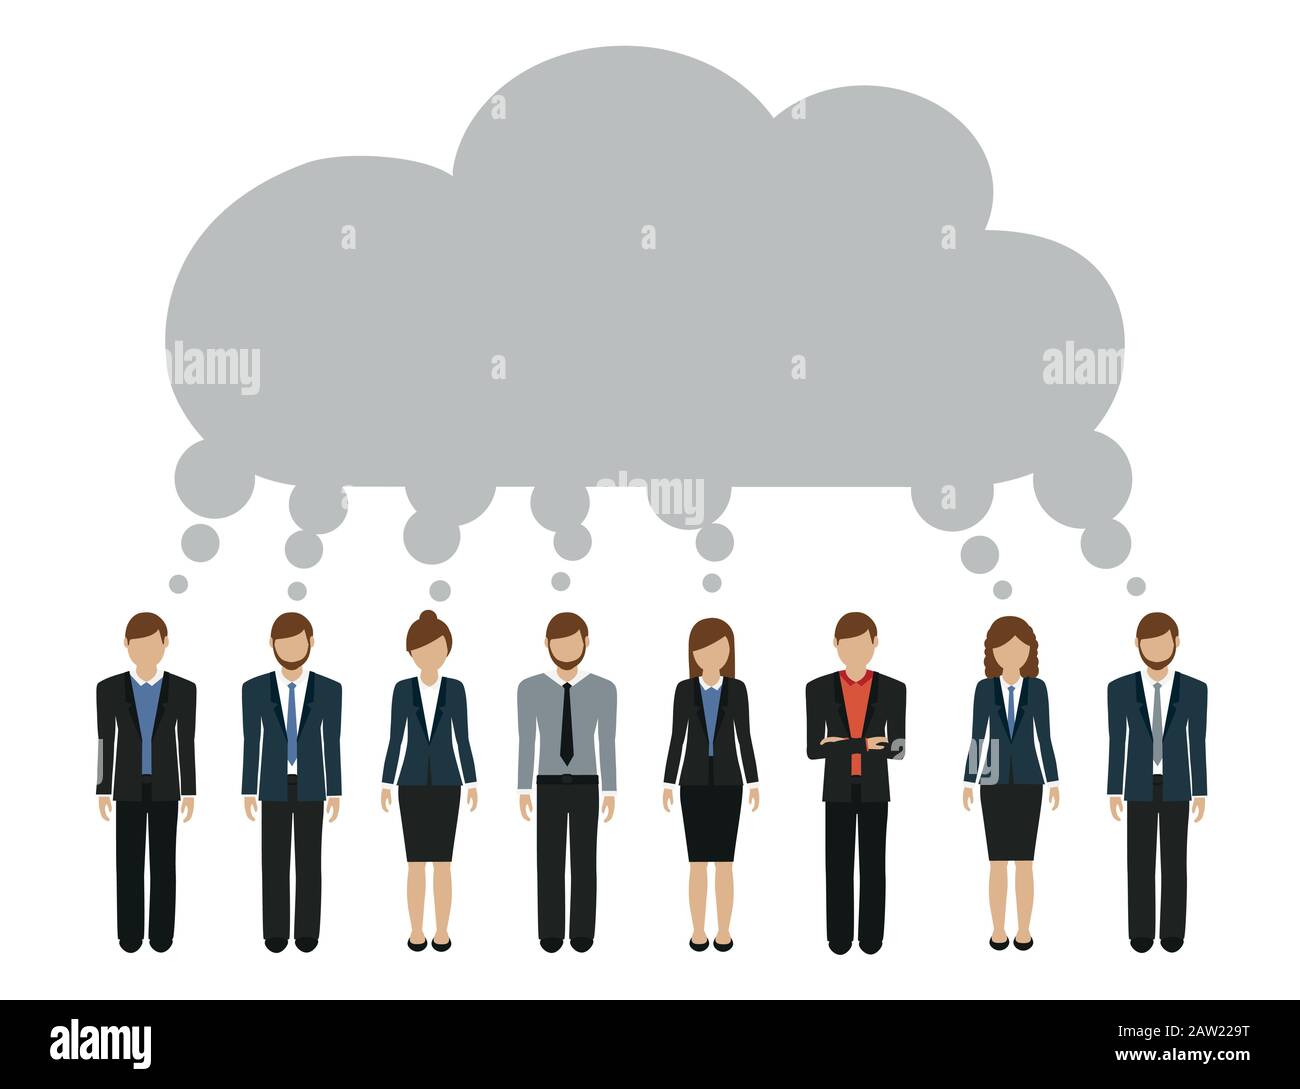 business men and women develop a common idea vector illustration EPS10 Stock Vector